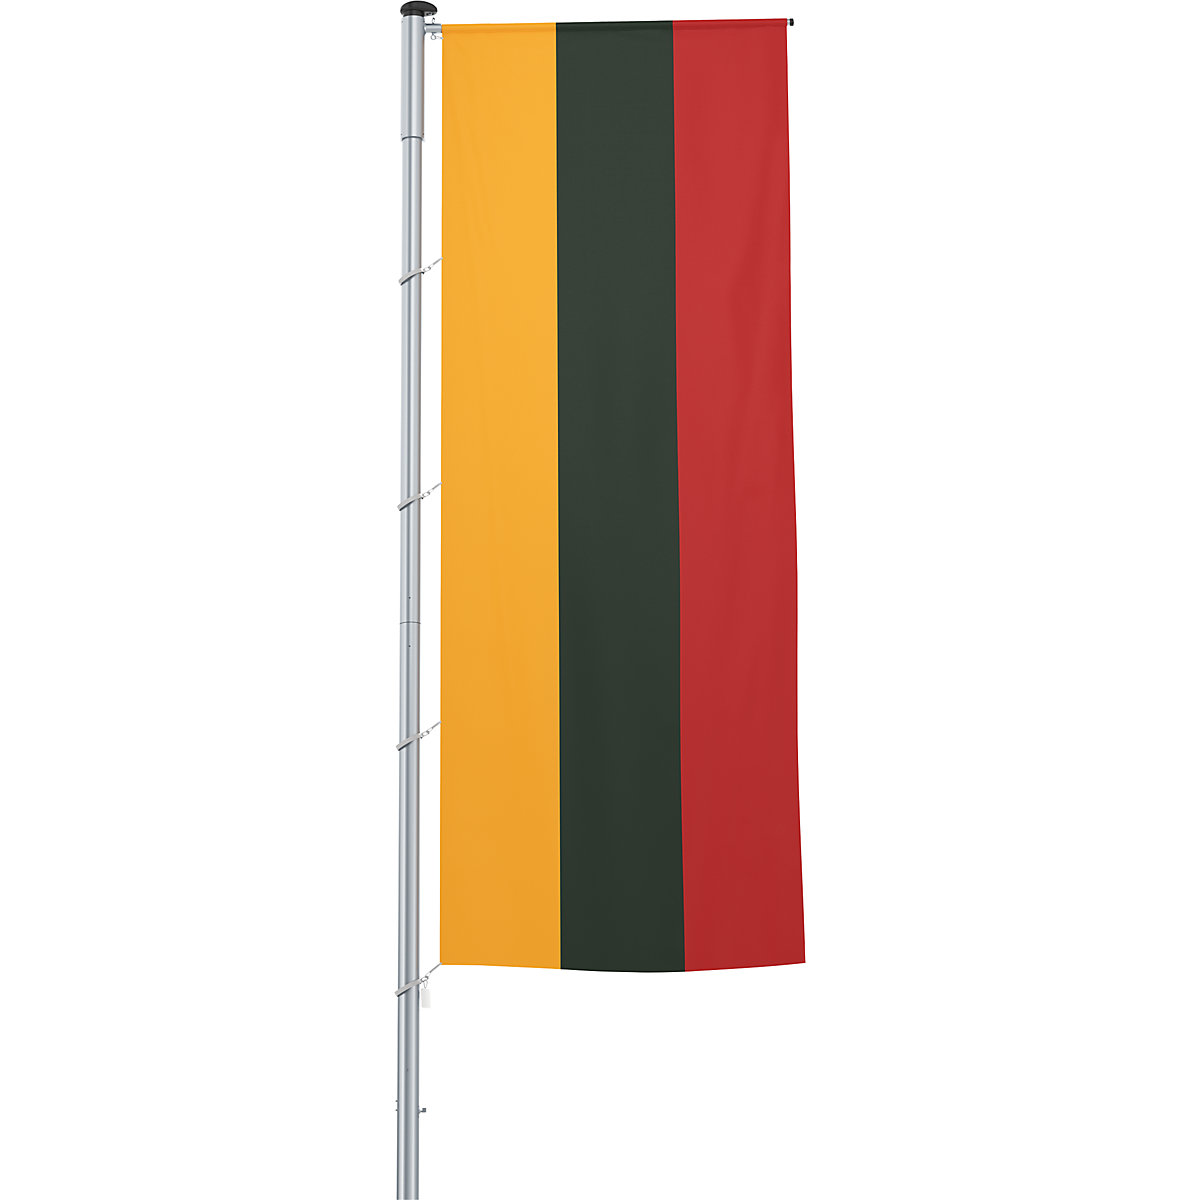 Steag pentru braț/drapel național – Mannus, format 1,2 x 3 m, Lituania-20